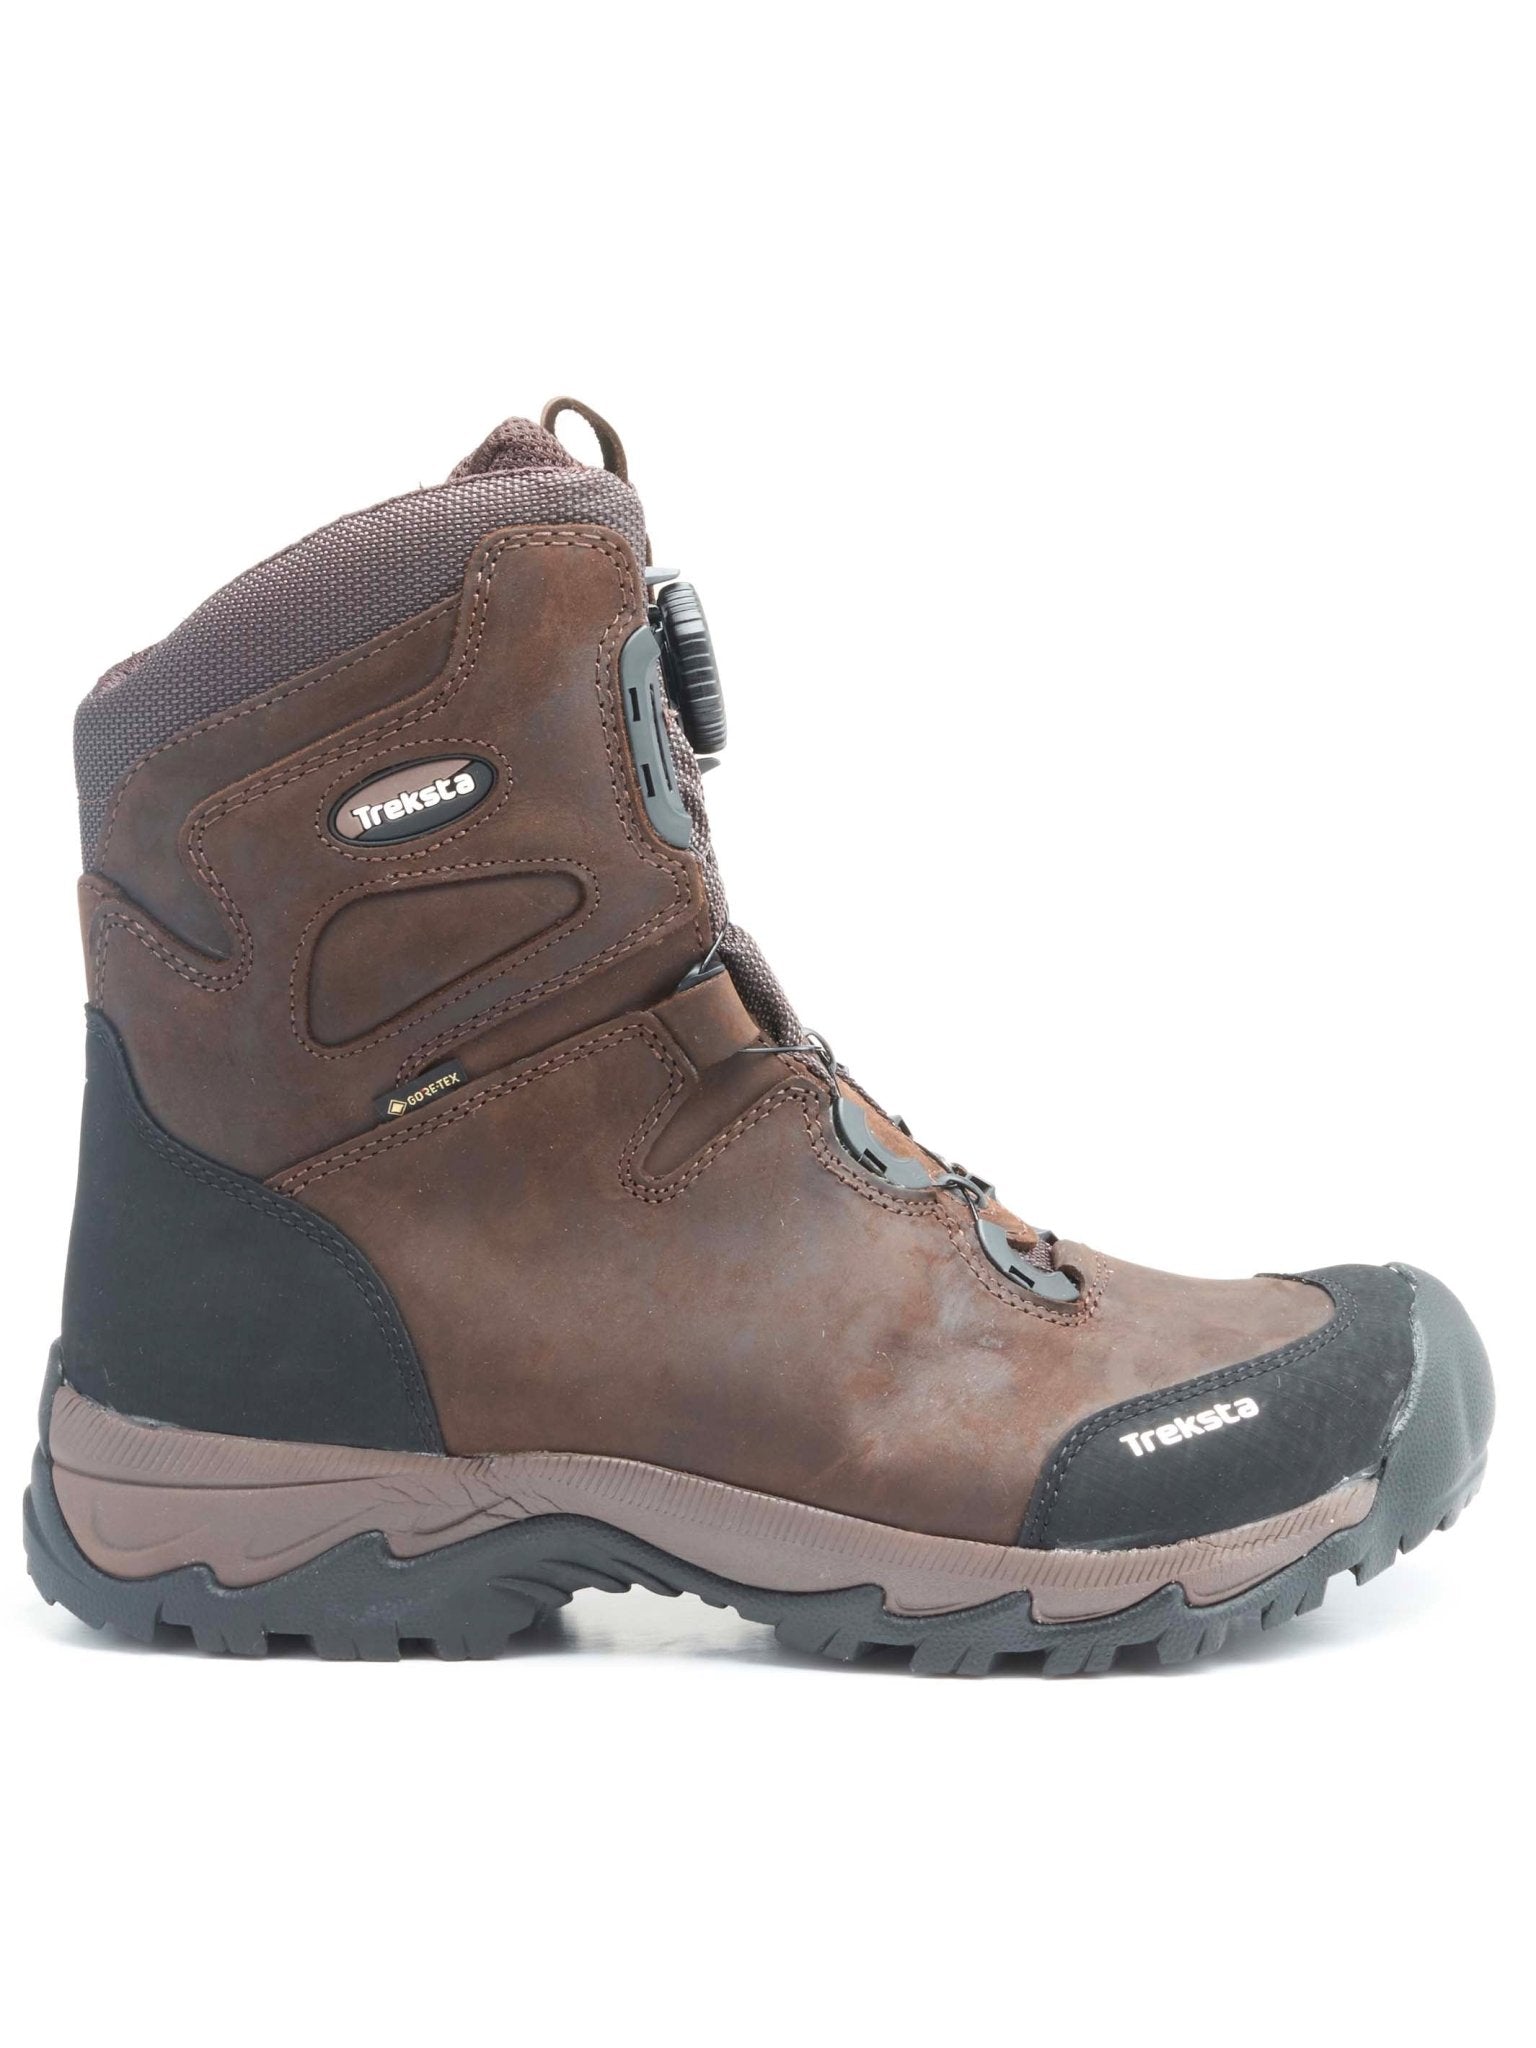 4elementsclothingTrekstaTreksta - Winchester 8" Gore-Tex Waterproof Boots - Outoor Premium Leather BOA Lacing System Mens bootsBoots750122562268